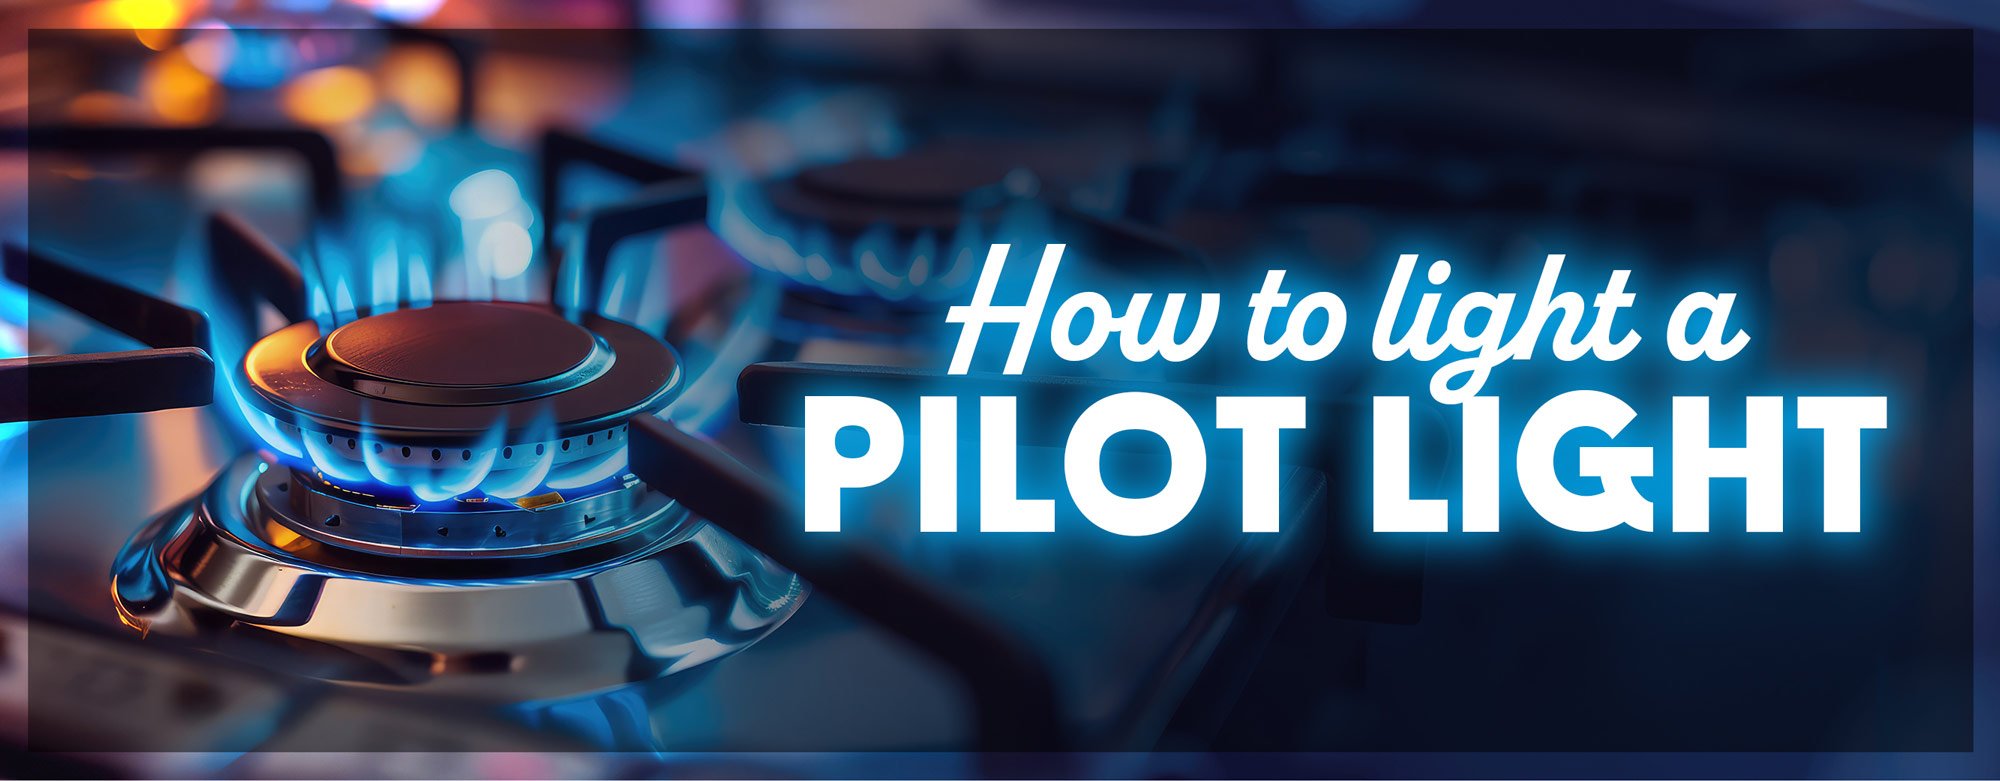 How To Light a Pilot Light 